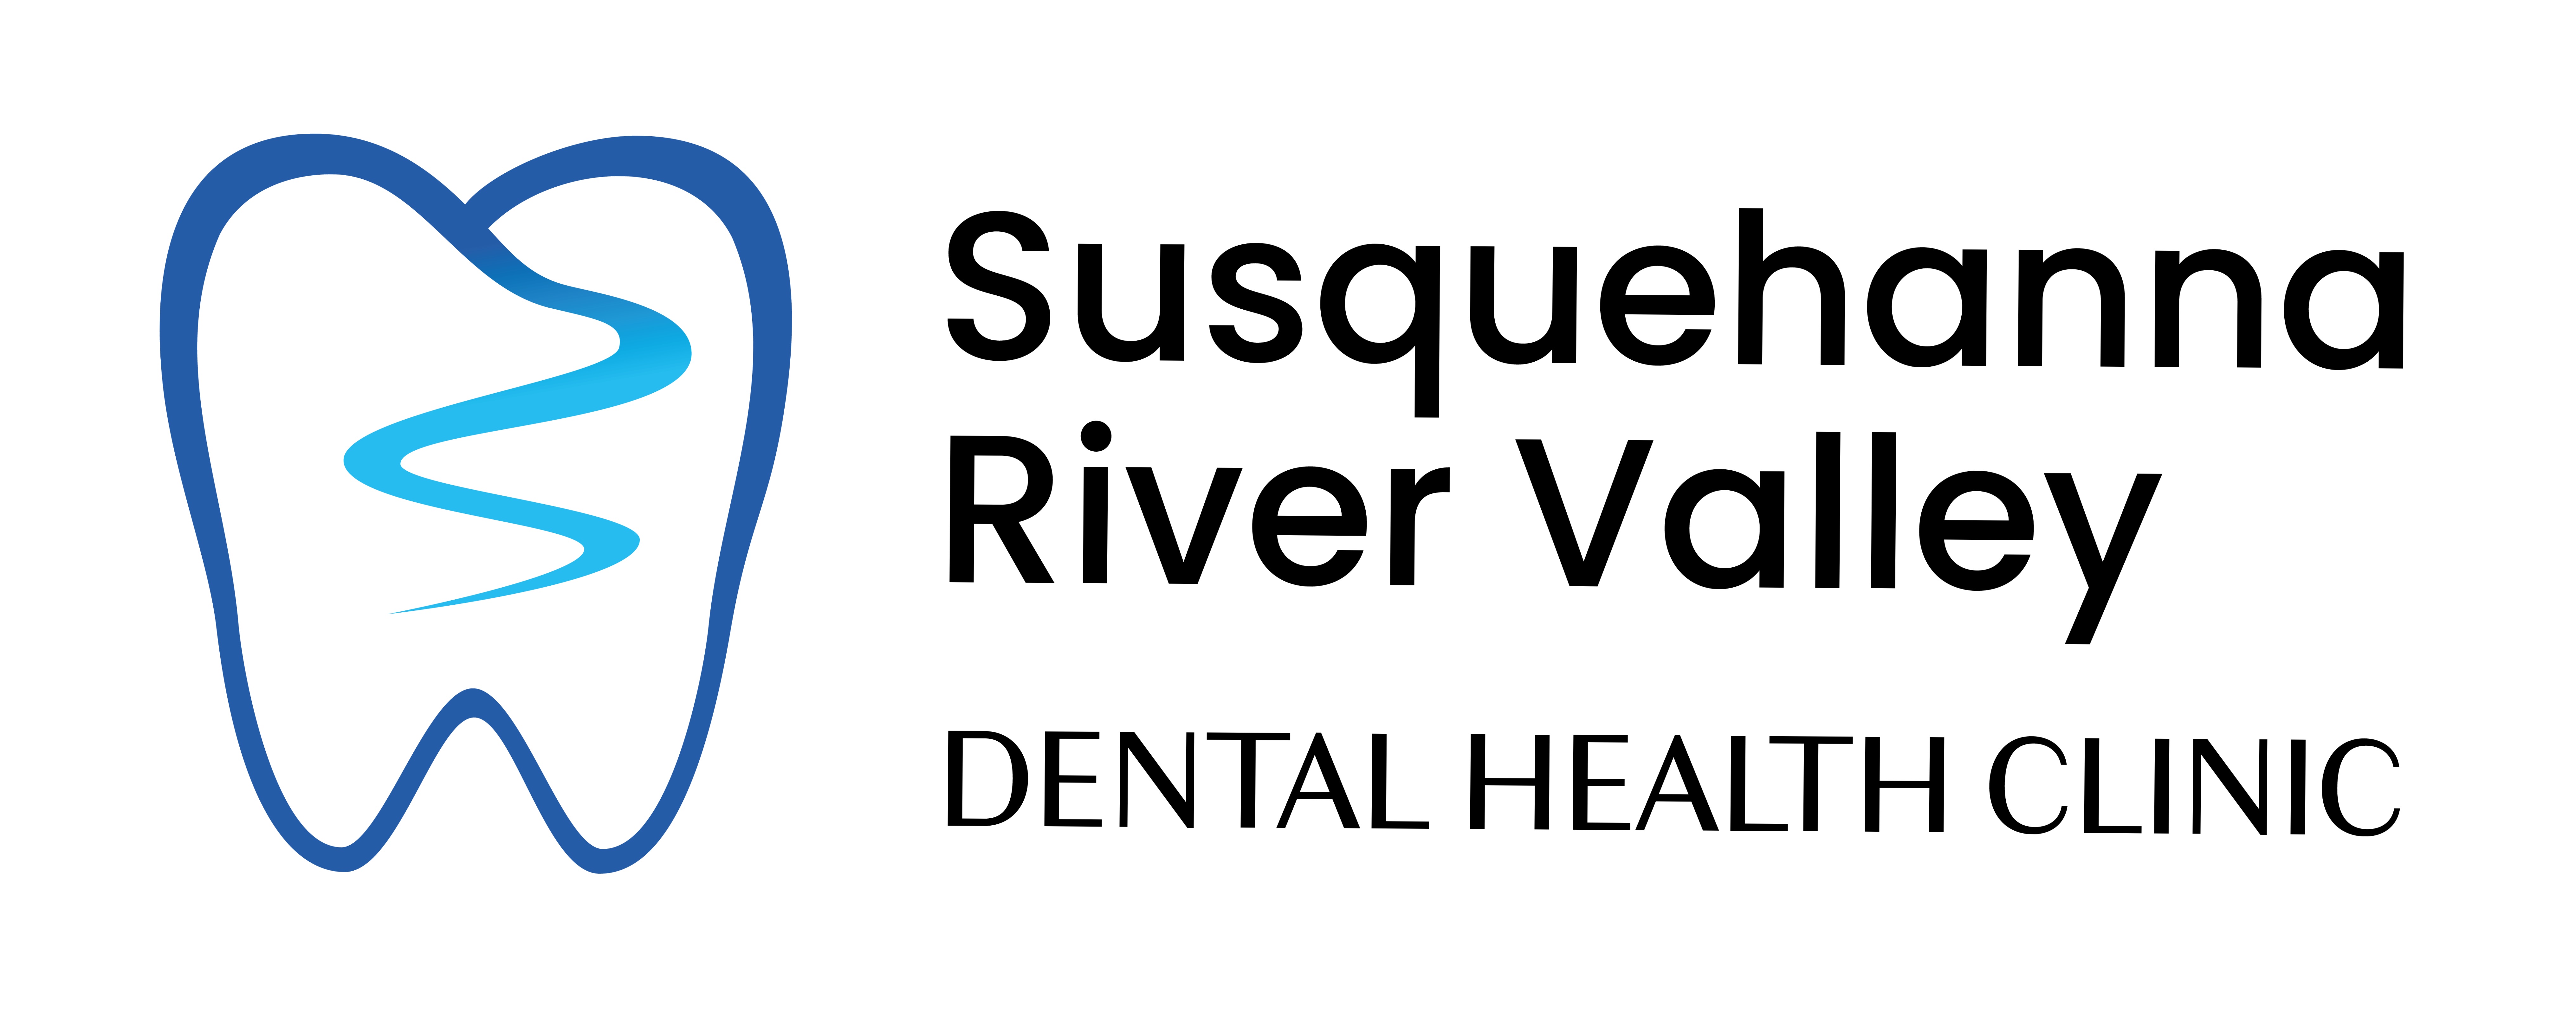 Susquehanna River Valley Dental Health Clinic